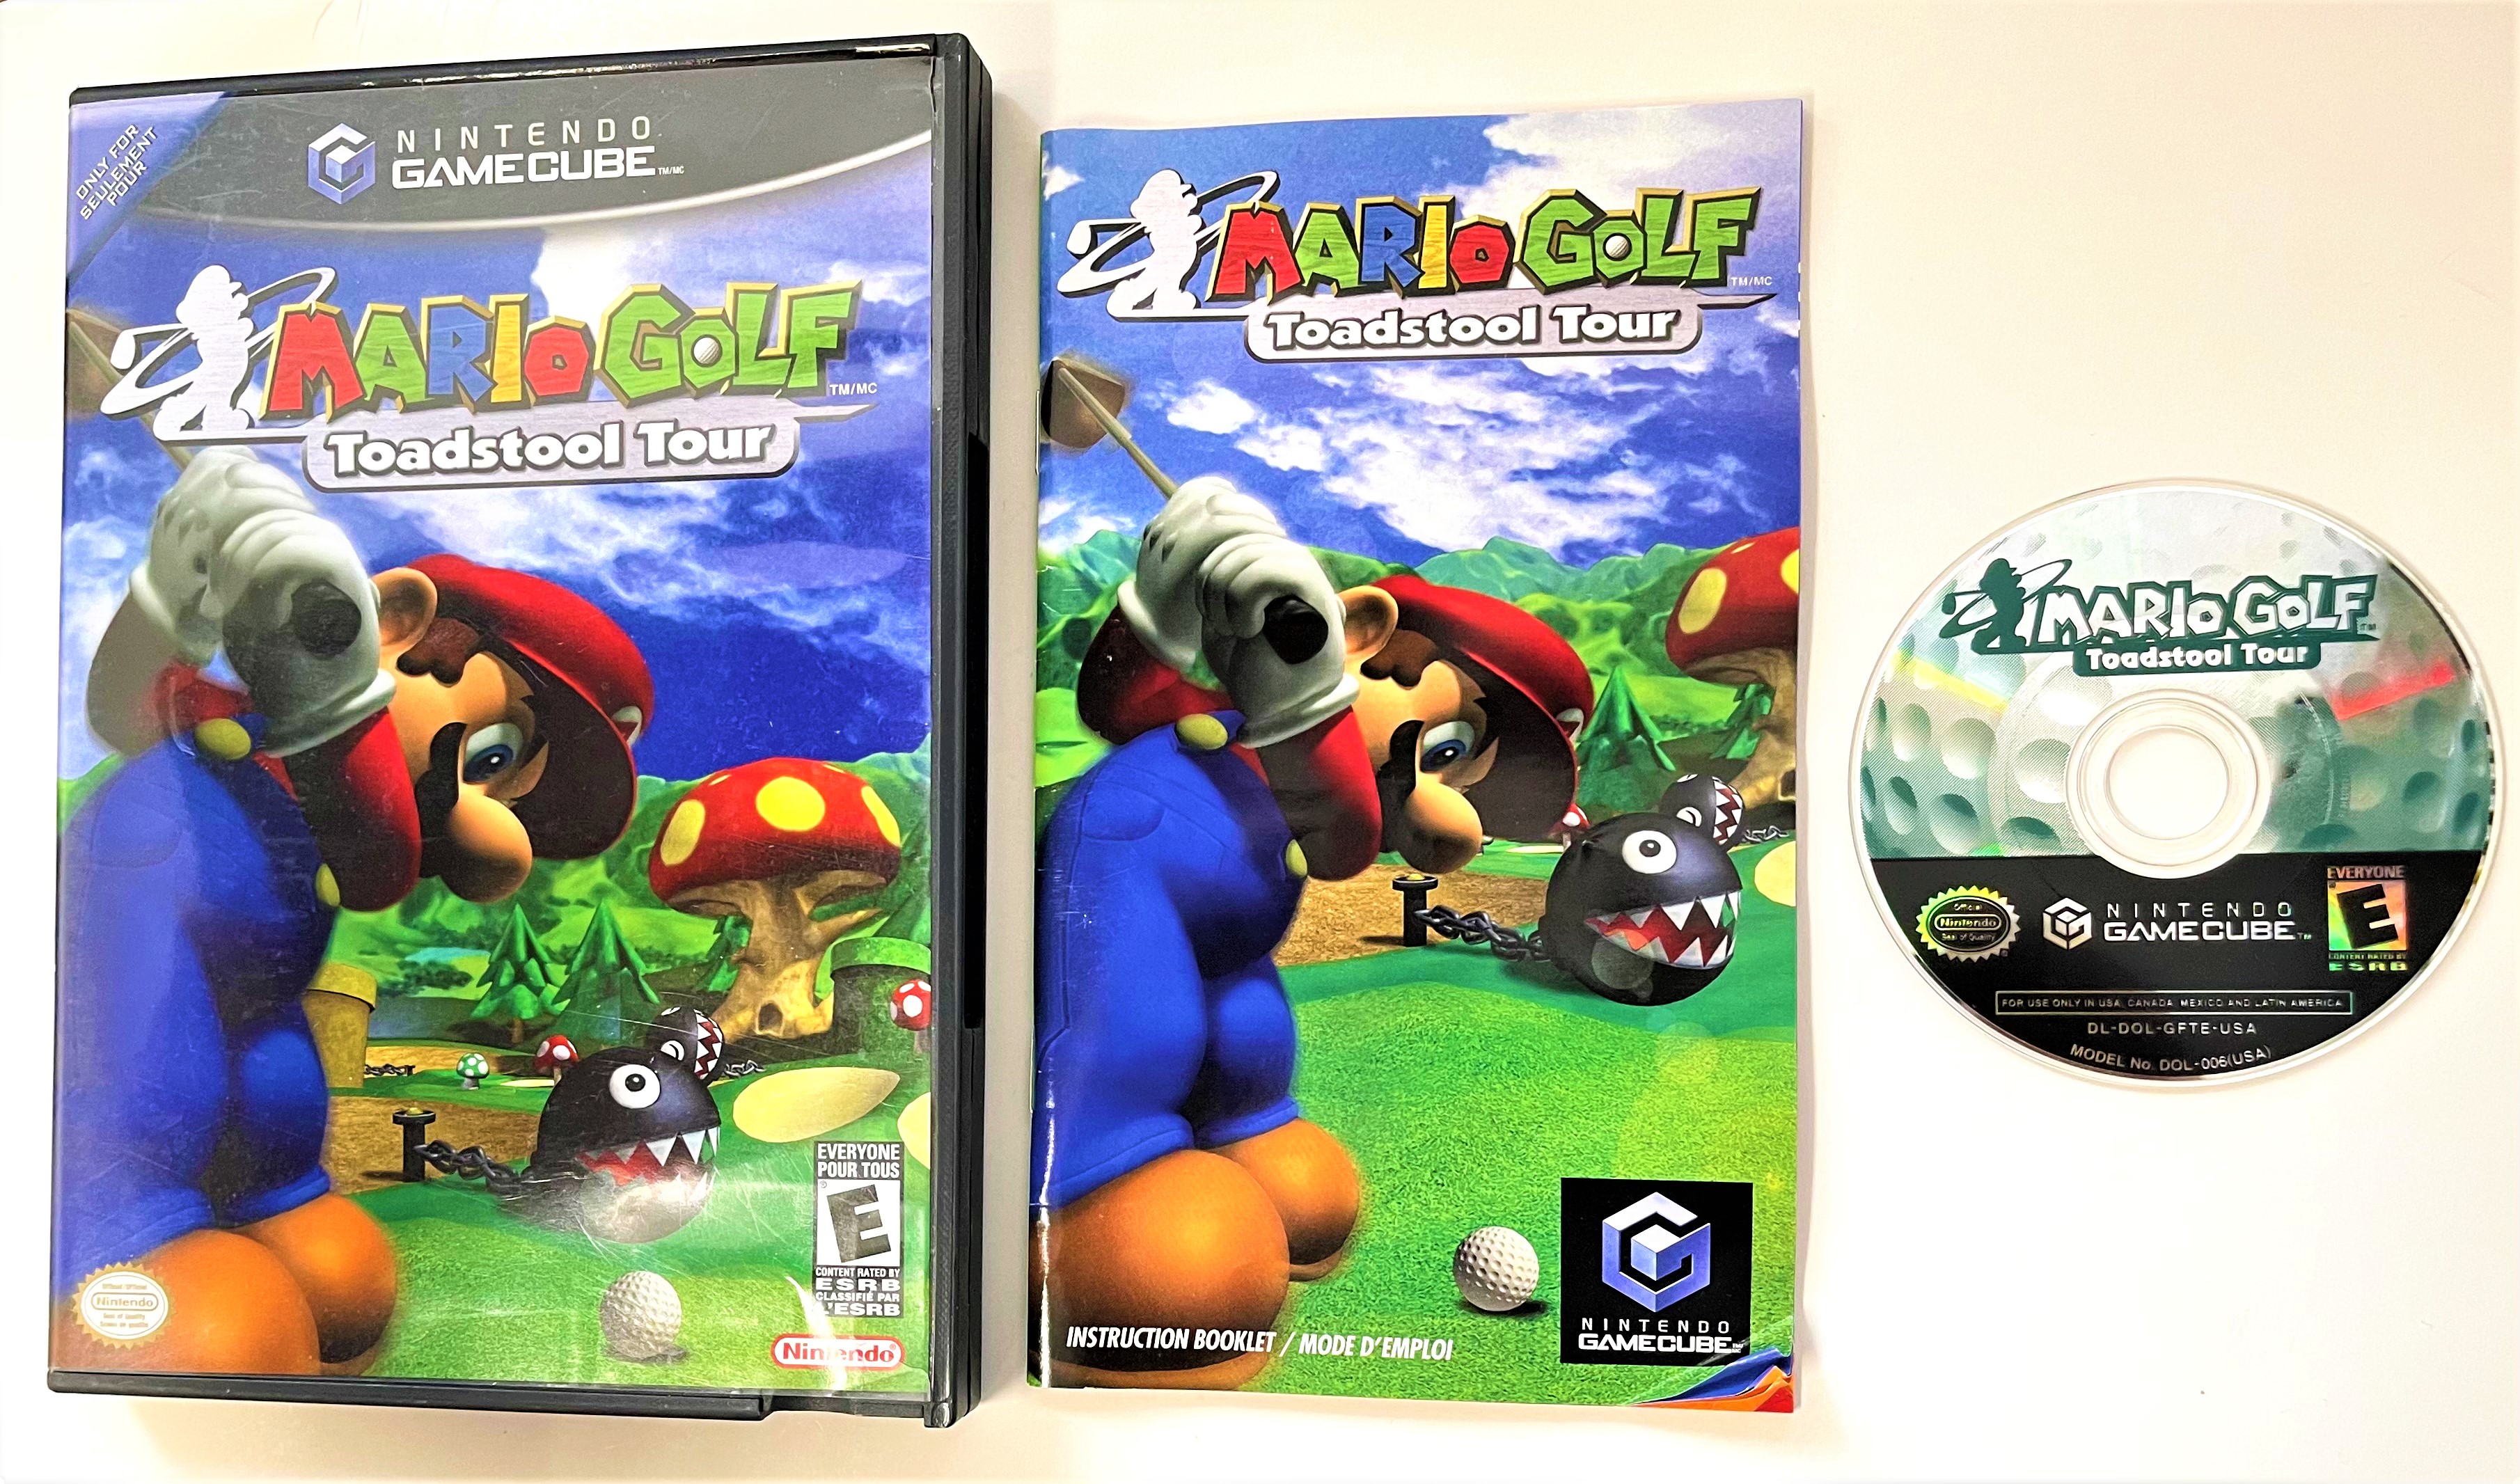 Mario Golf: Toadstool Tour for Nintendo GameCube